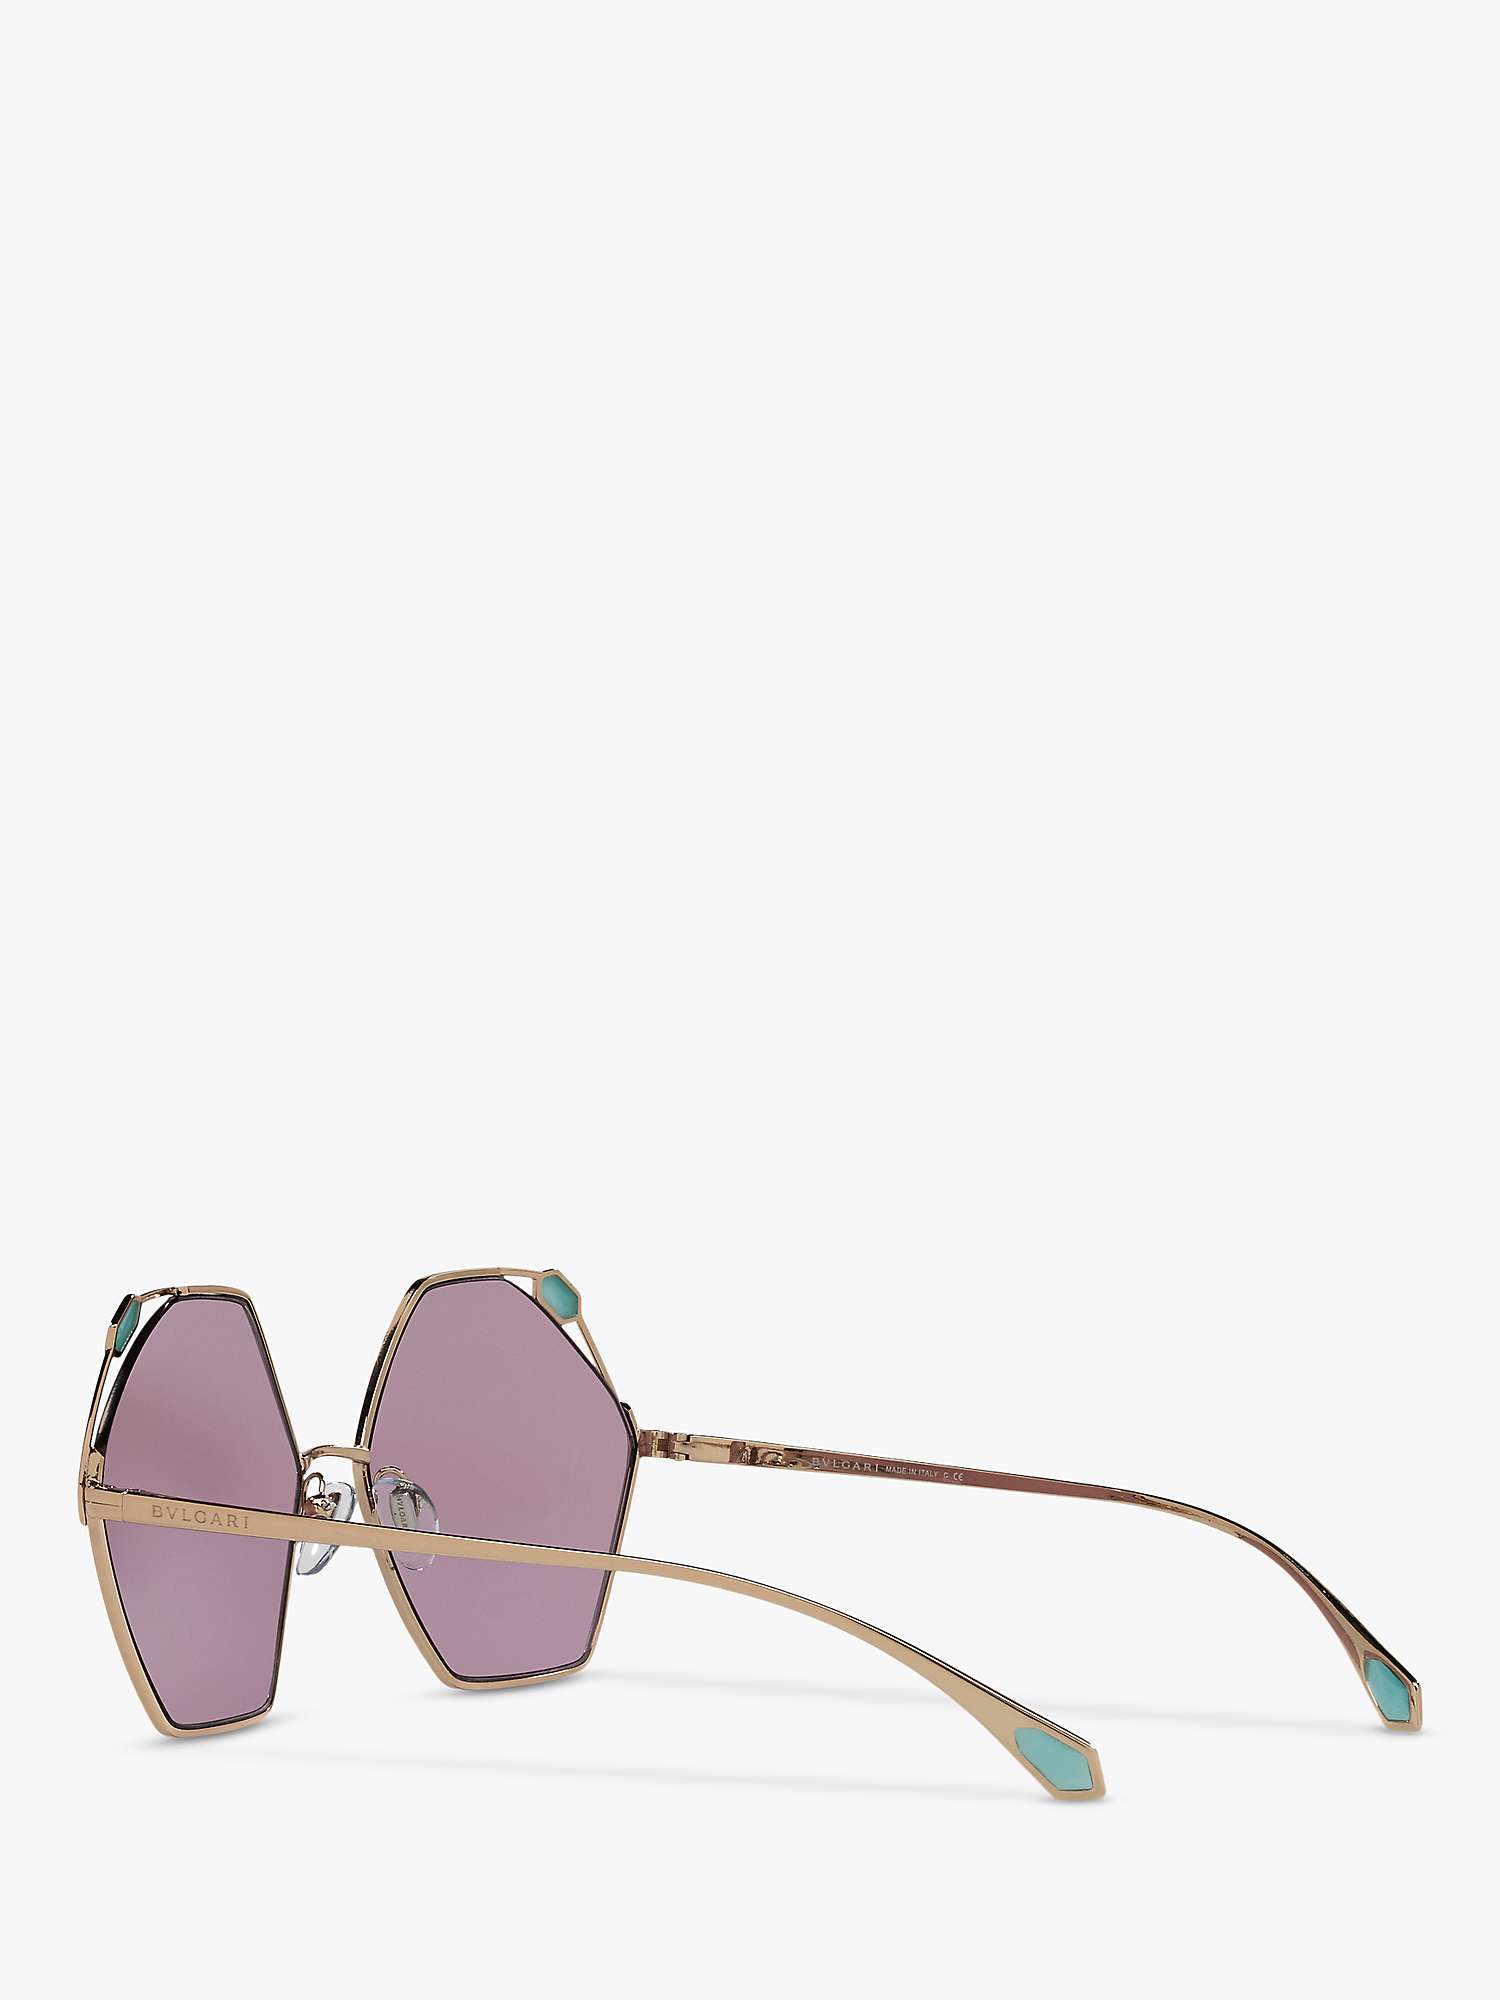 Buy BVLGARI BV6160 Women's Irregular Sunglasses, Gold/Pink Online at johnlewis.com